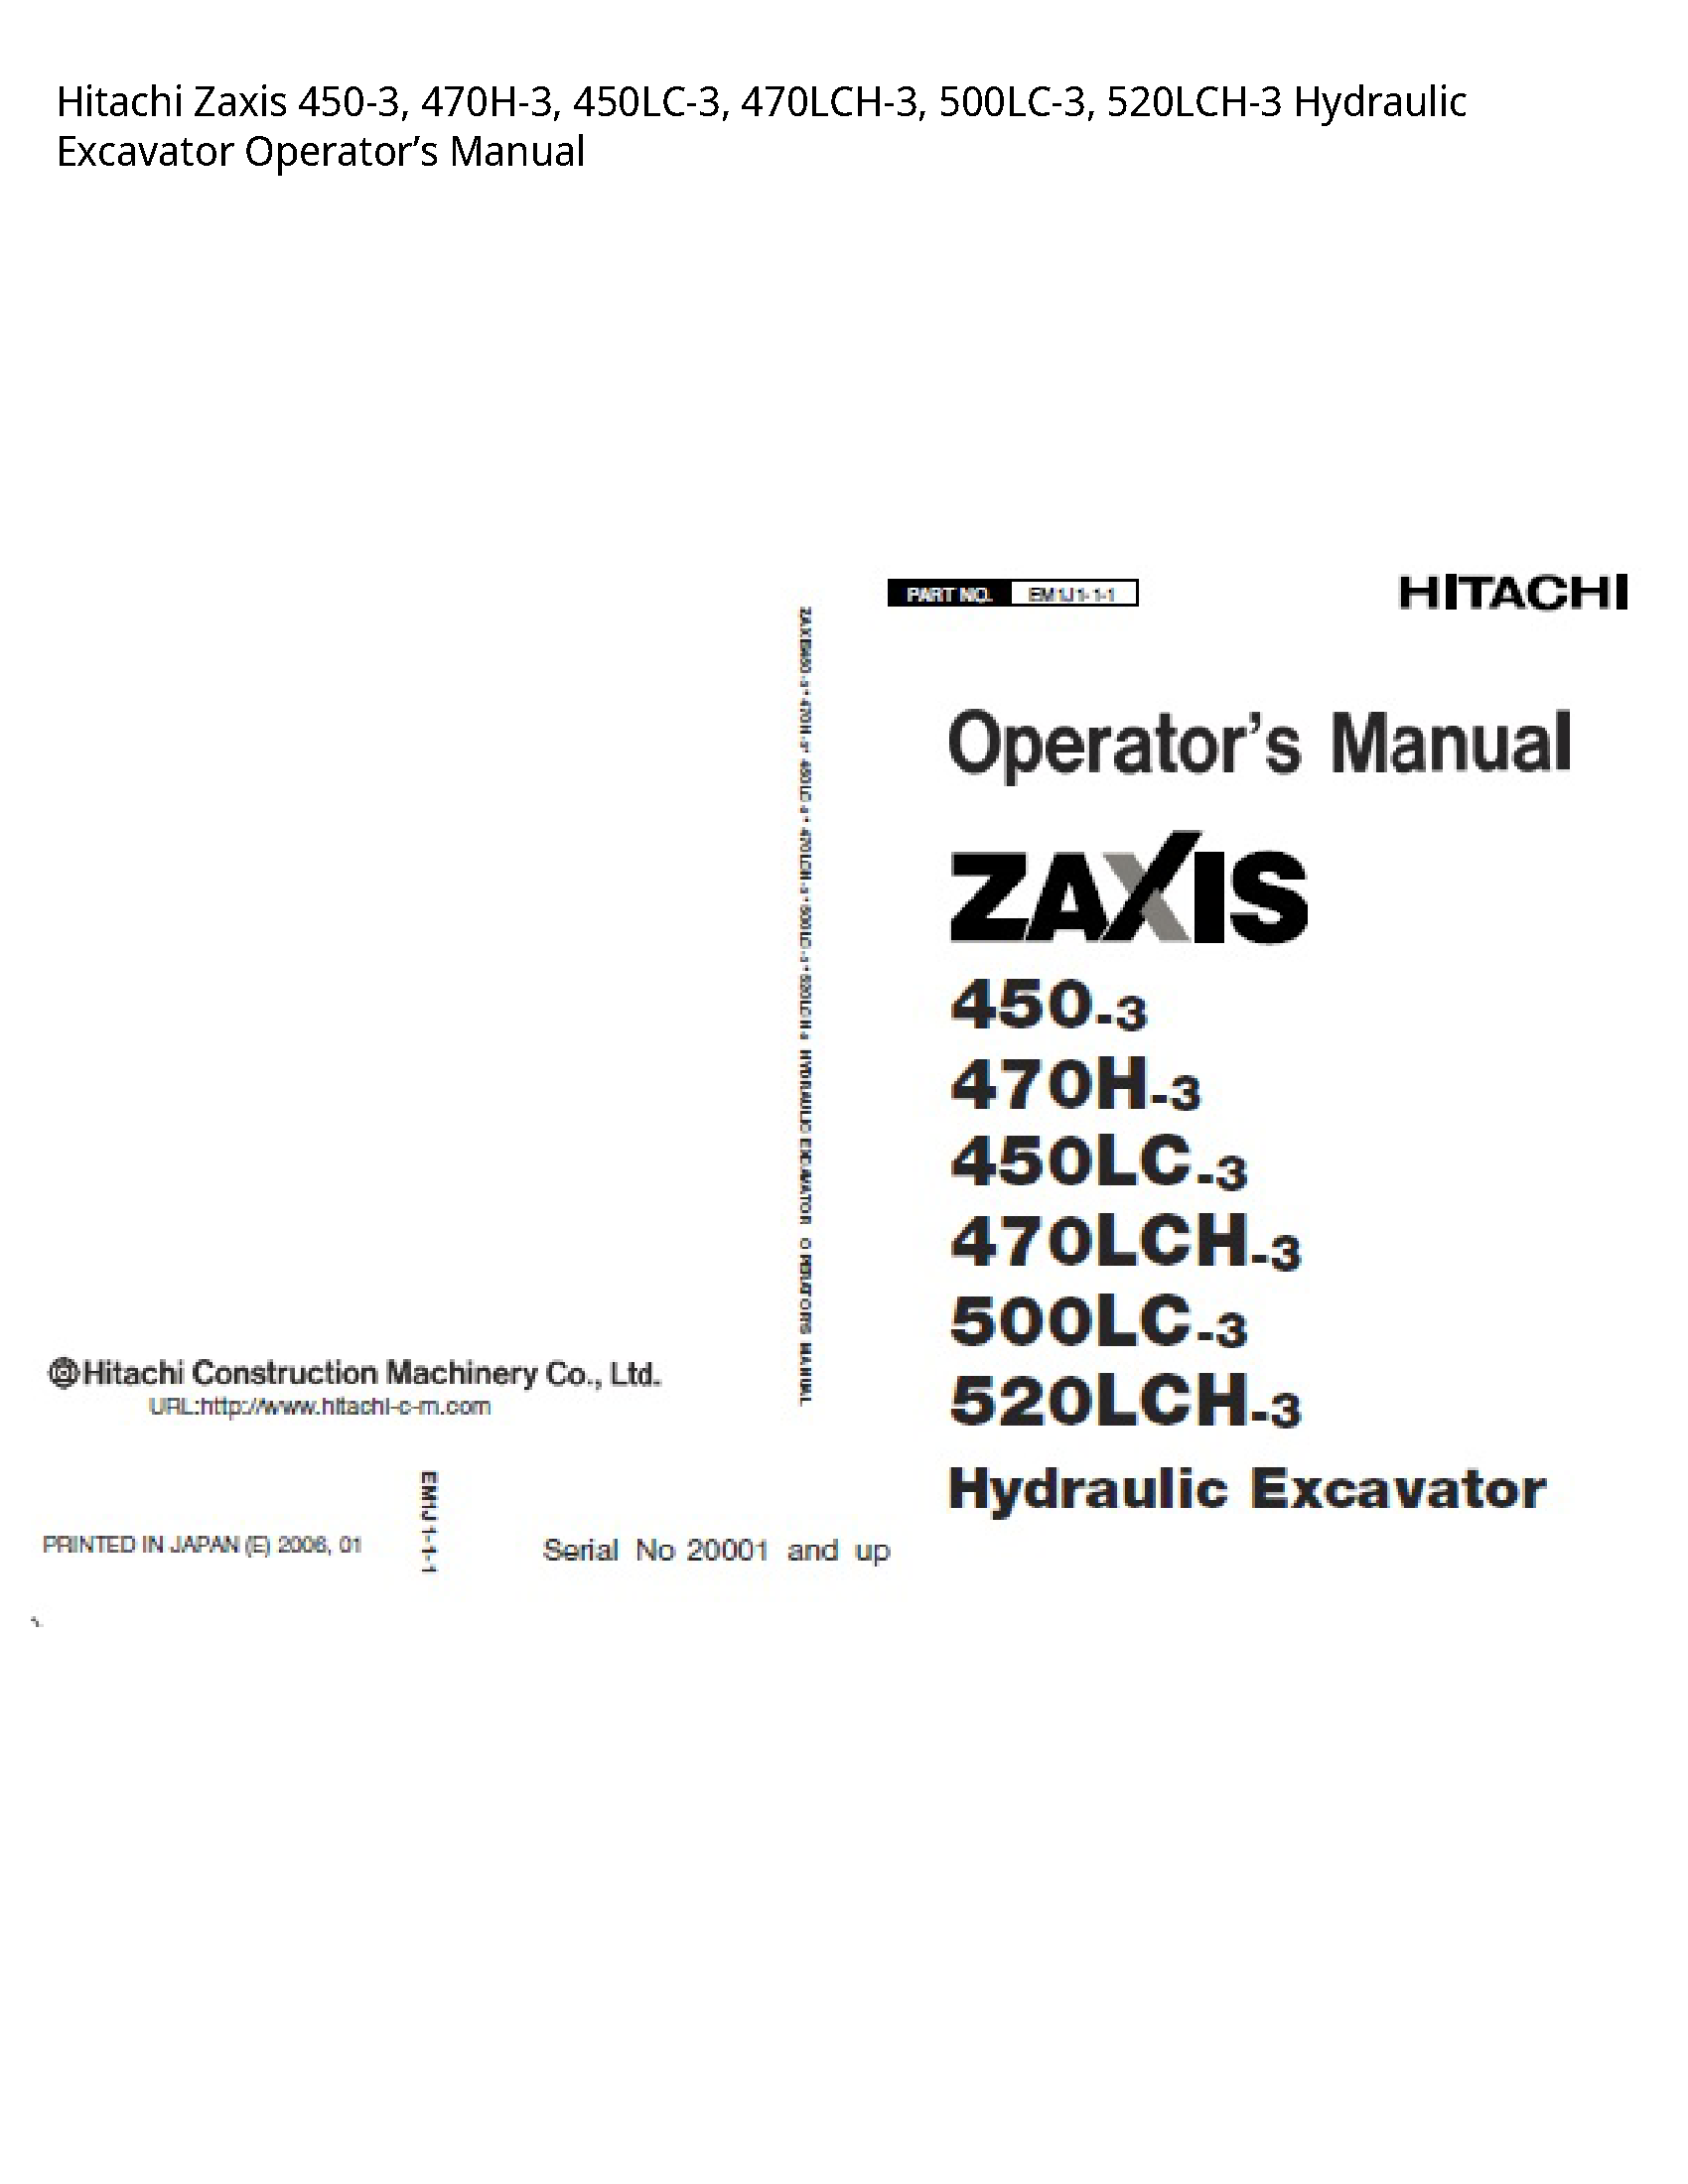 Hitachi 450-3 Zaxis Hydraulic Excavator Operator’s manual